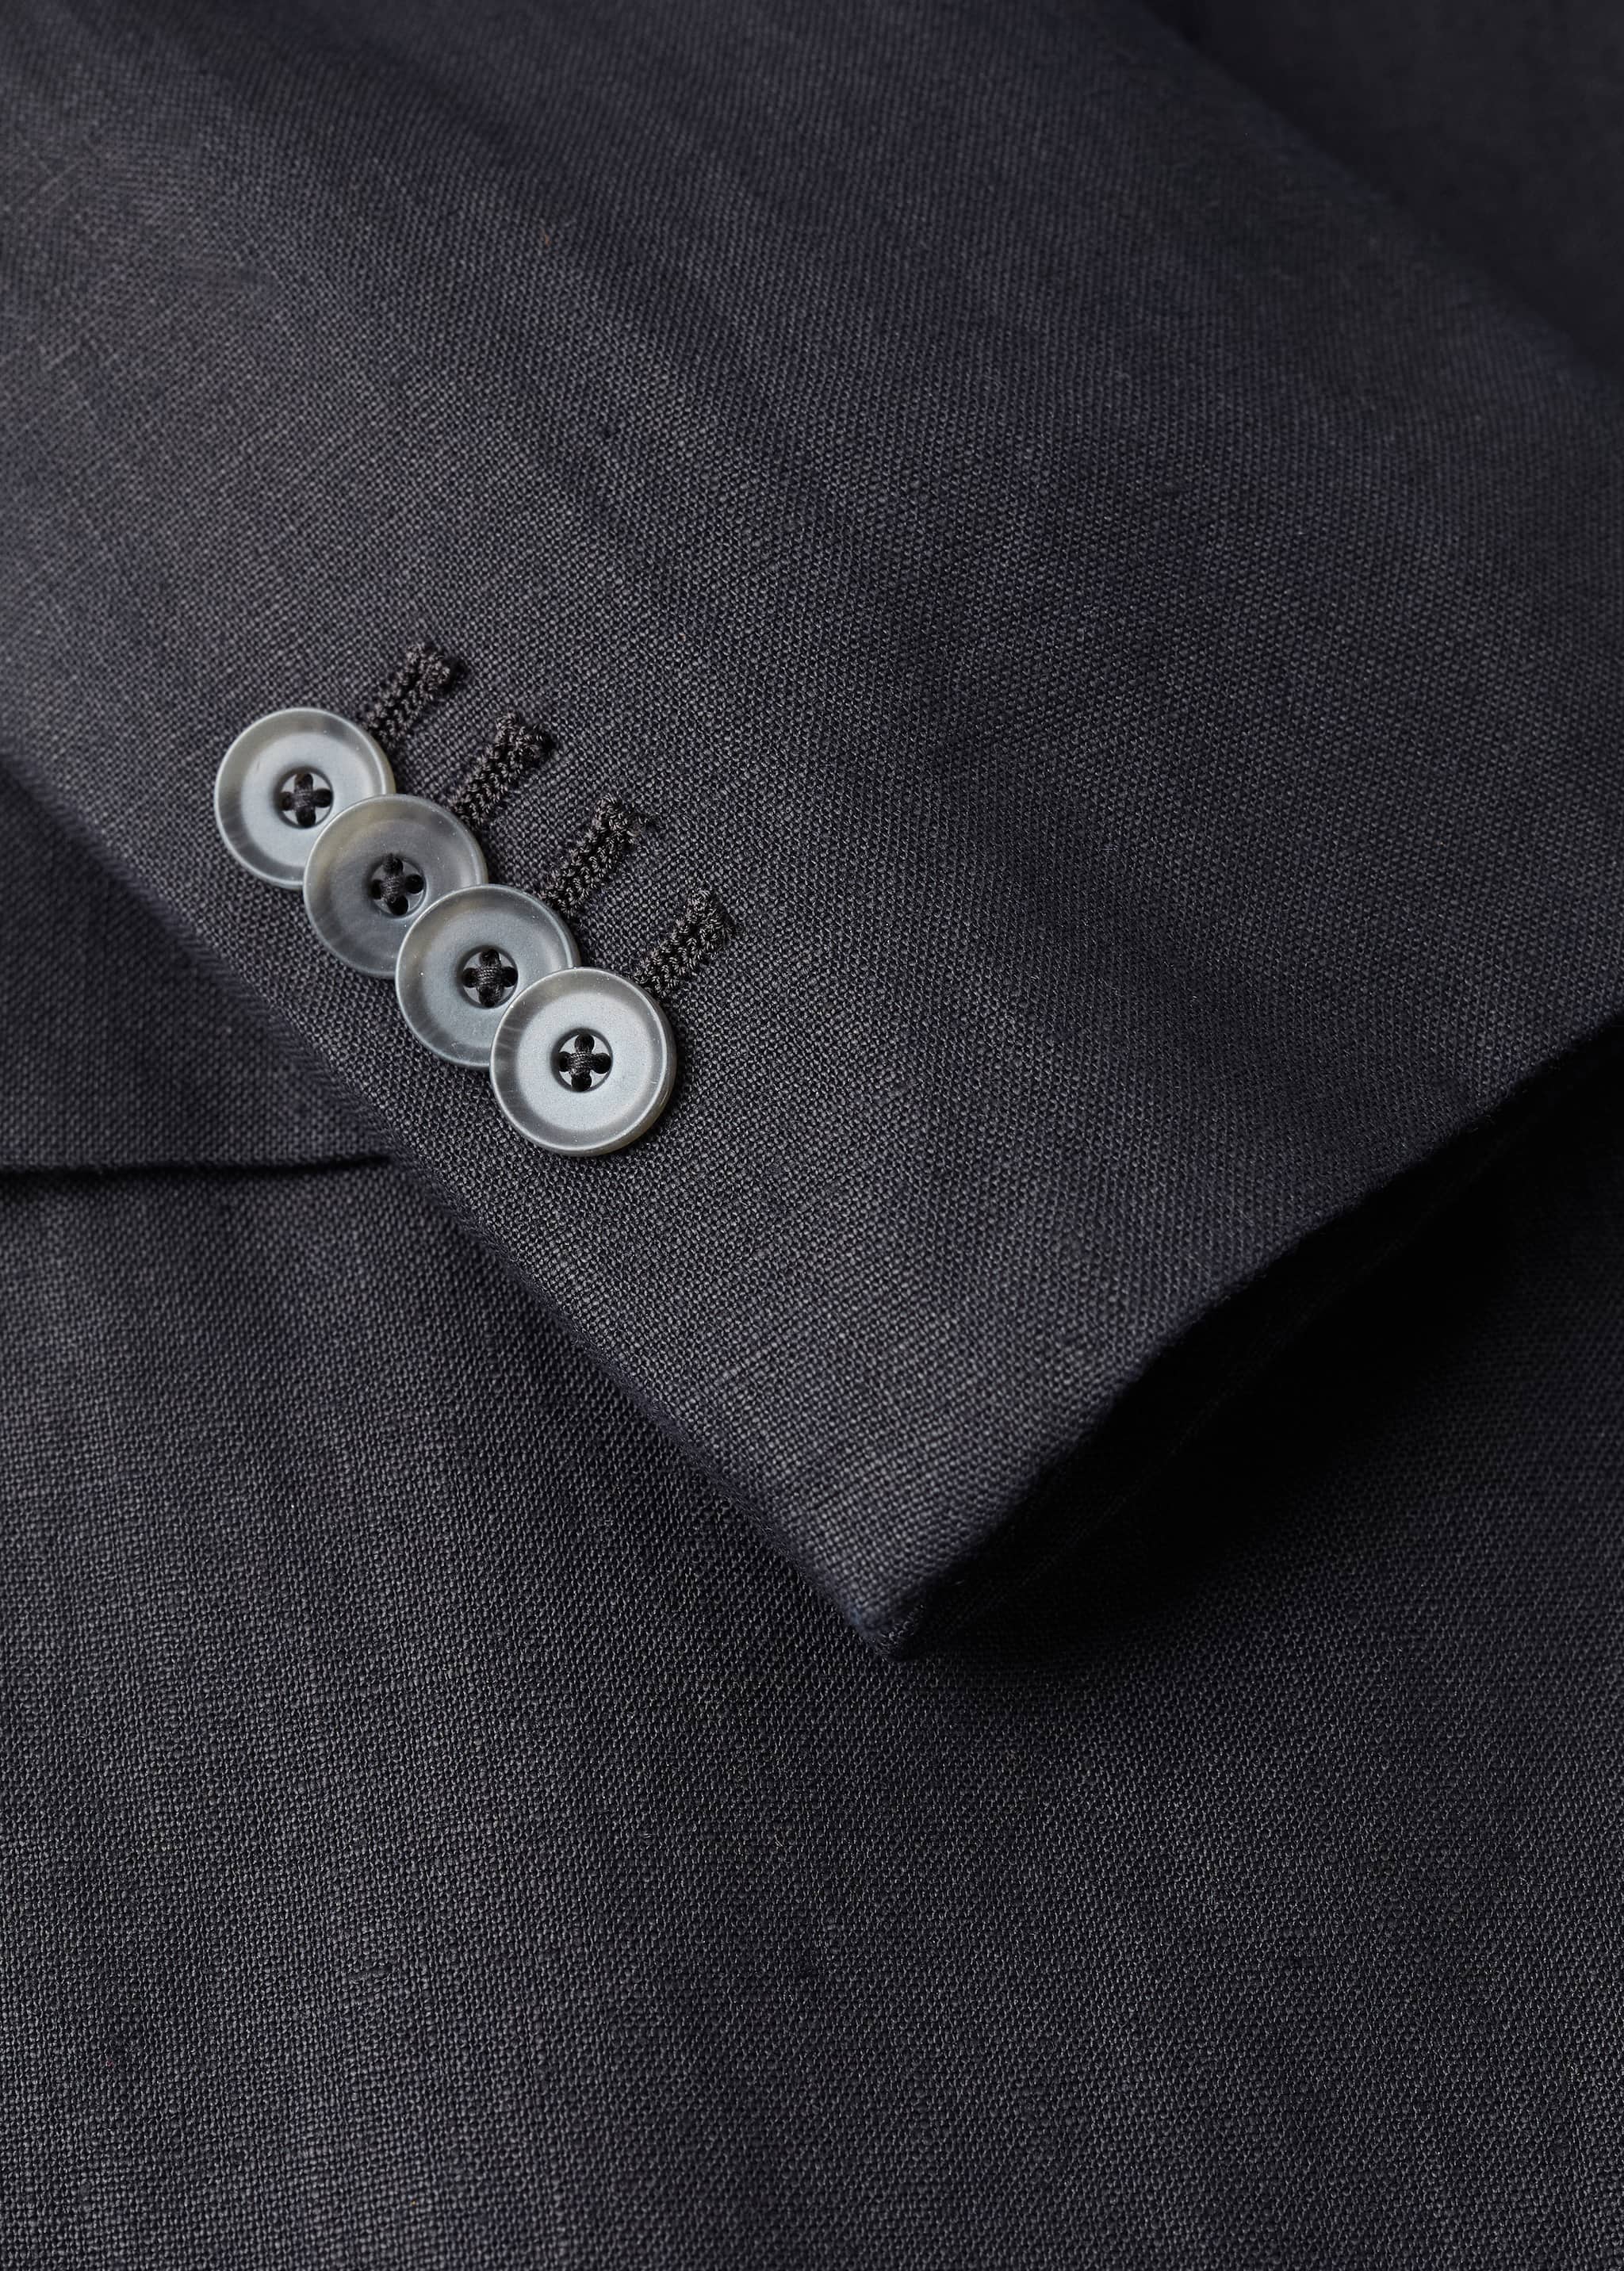 100% linen slim fit blazer - Details of the article 9